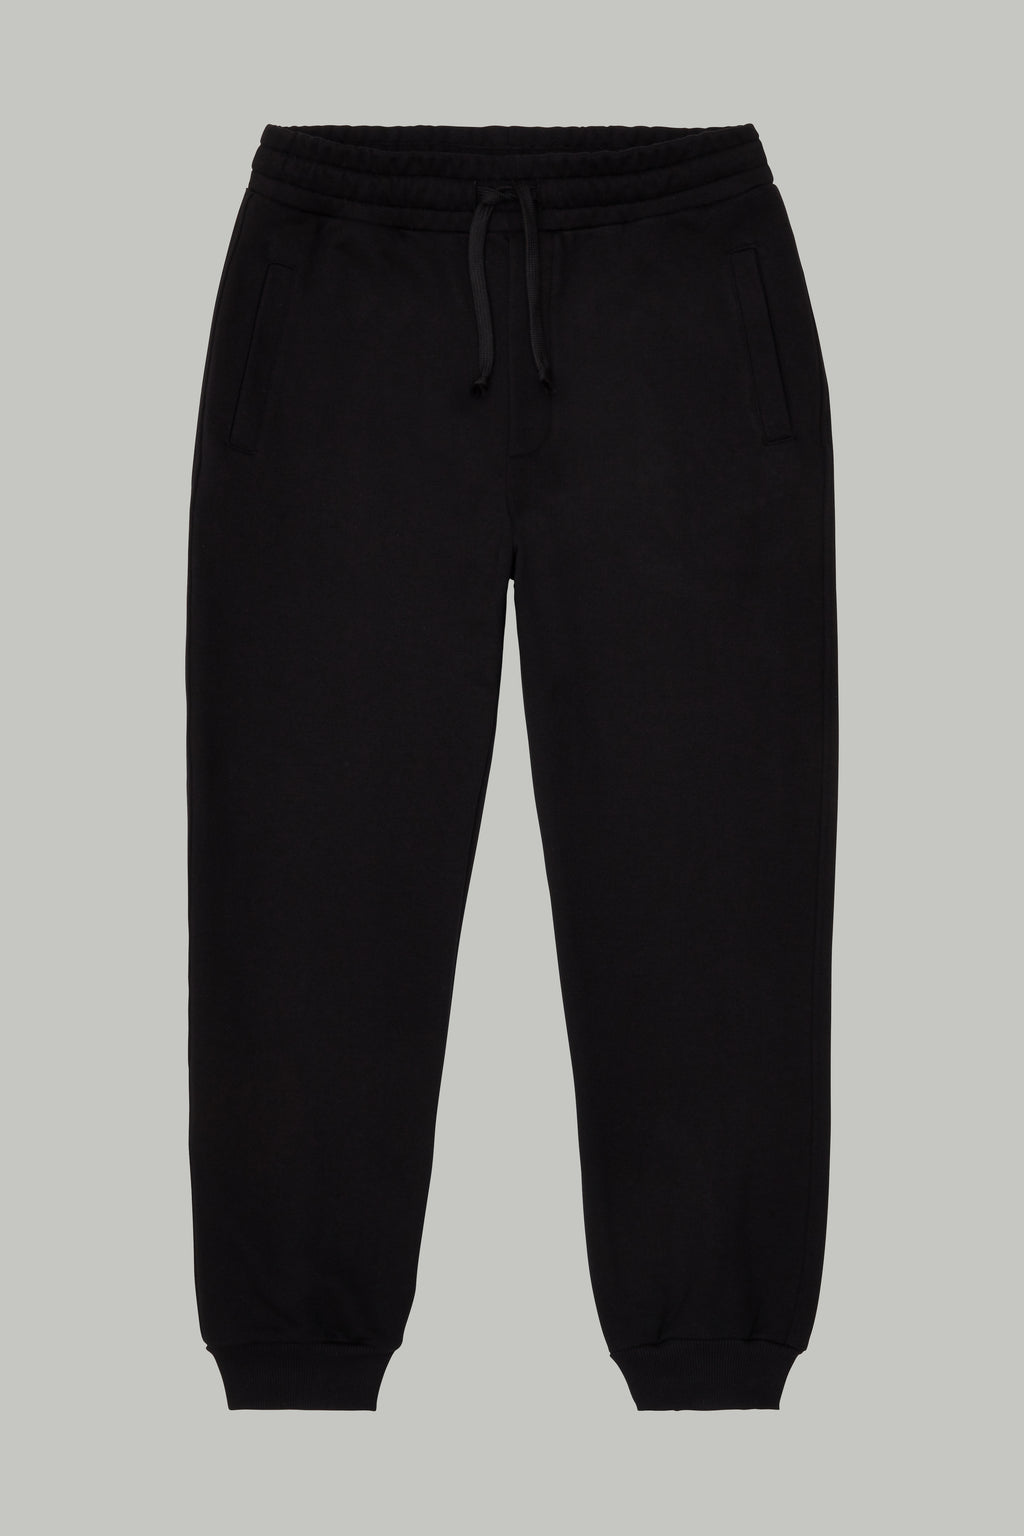 Black - Greggio Blanks Sweatpant SW1 Wholesale - Black - Luxury Made in Italy Wholesale Streetwear